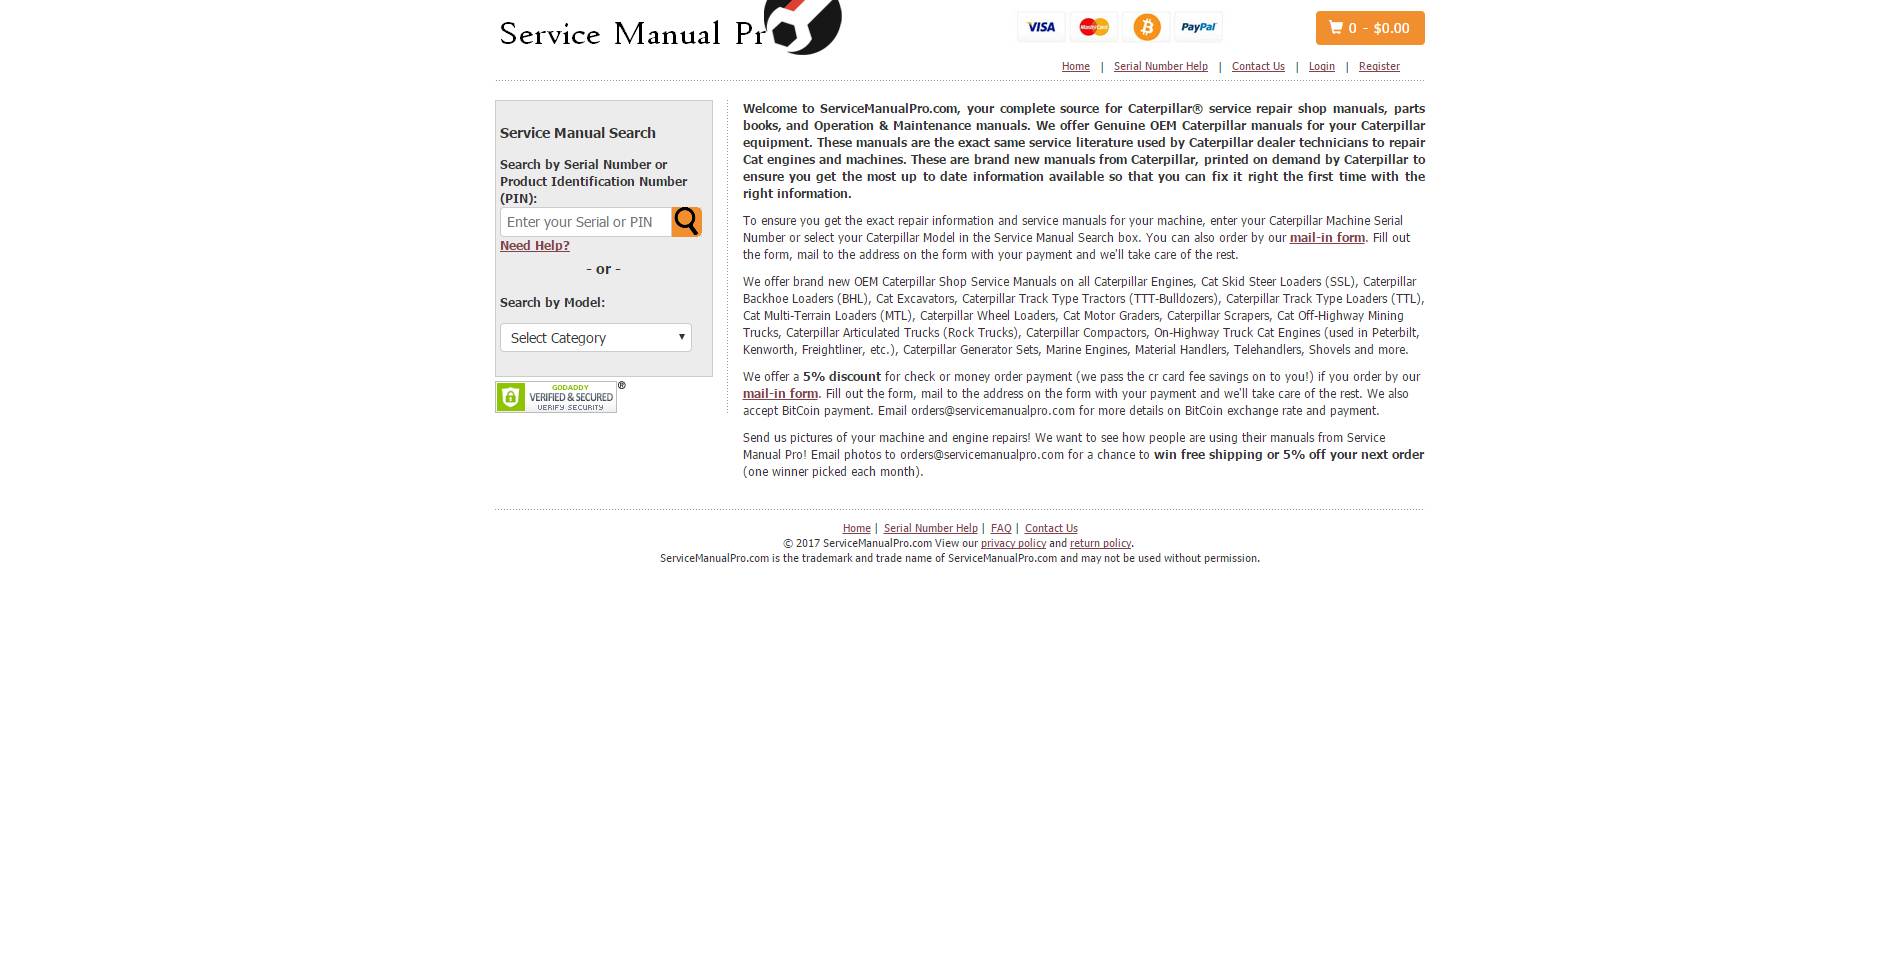 ServiceManualPro